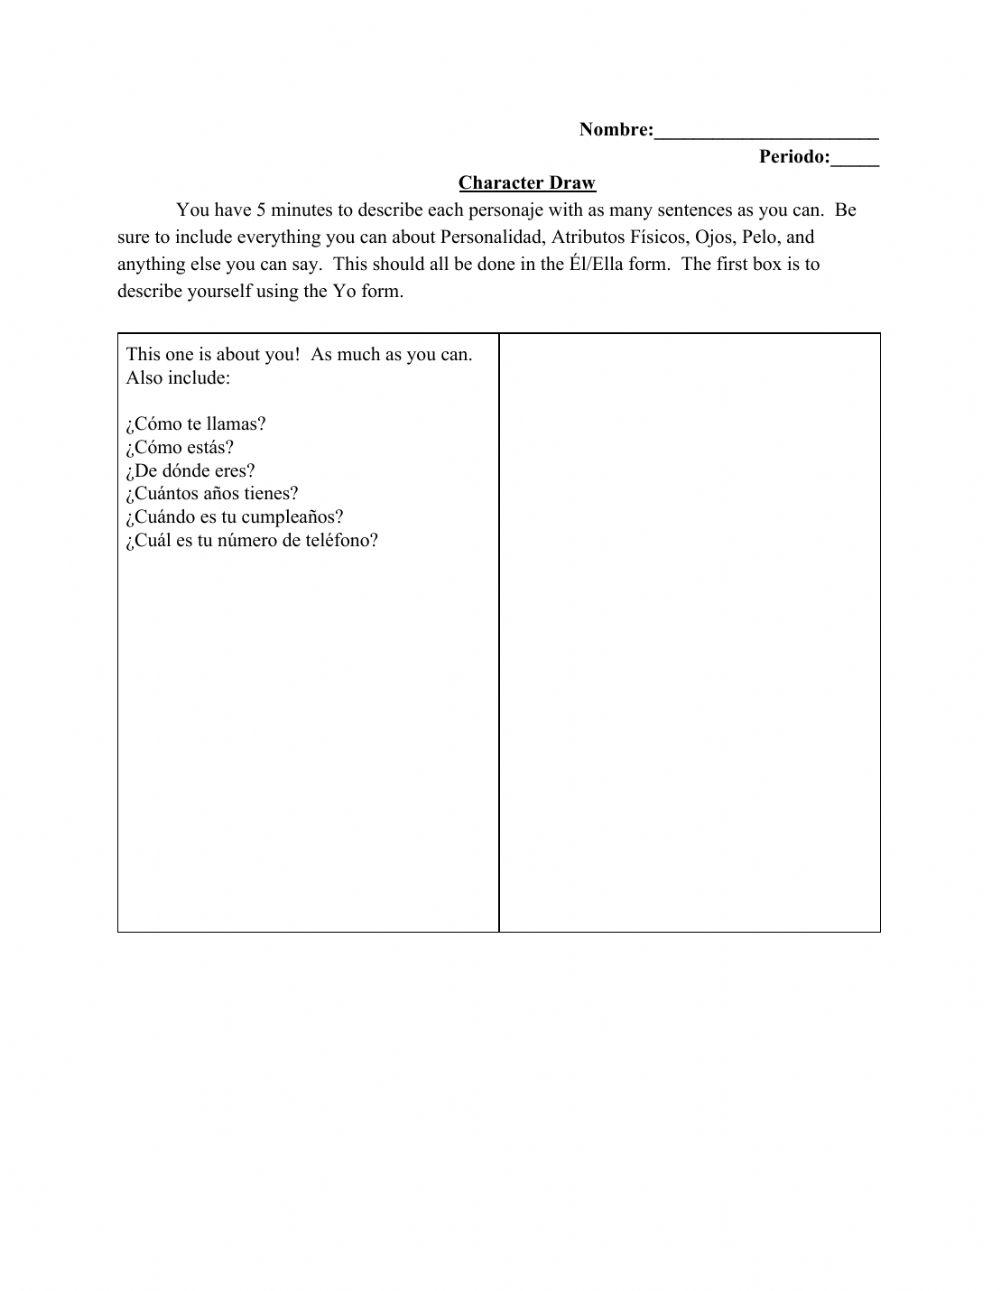 S1U2 Character Draw worksheet | Live Worksheets